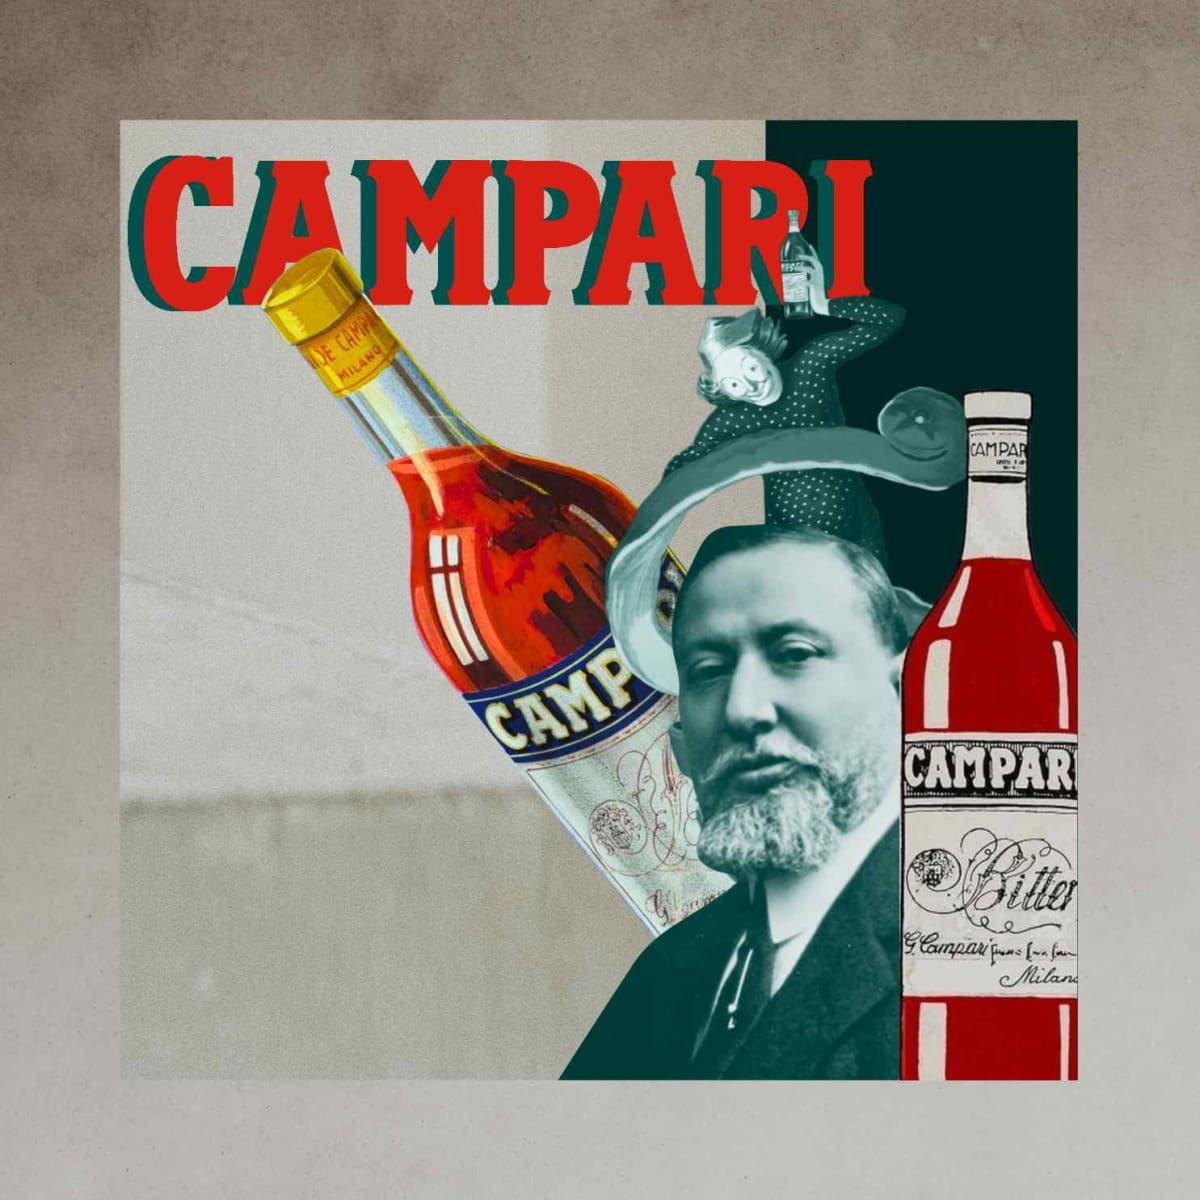 CAMPARI BITTER 25% 1L – Beverages Bulgaria